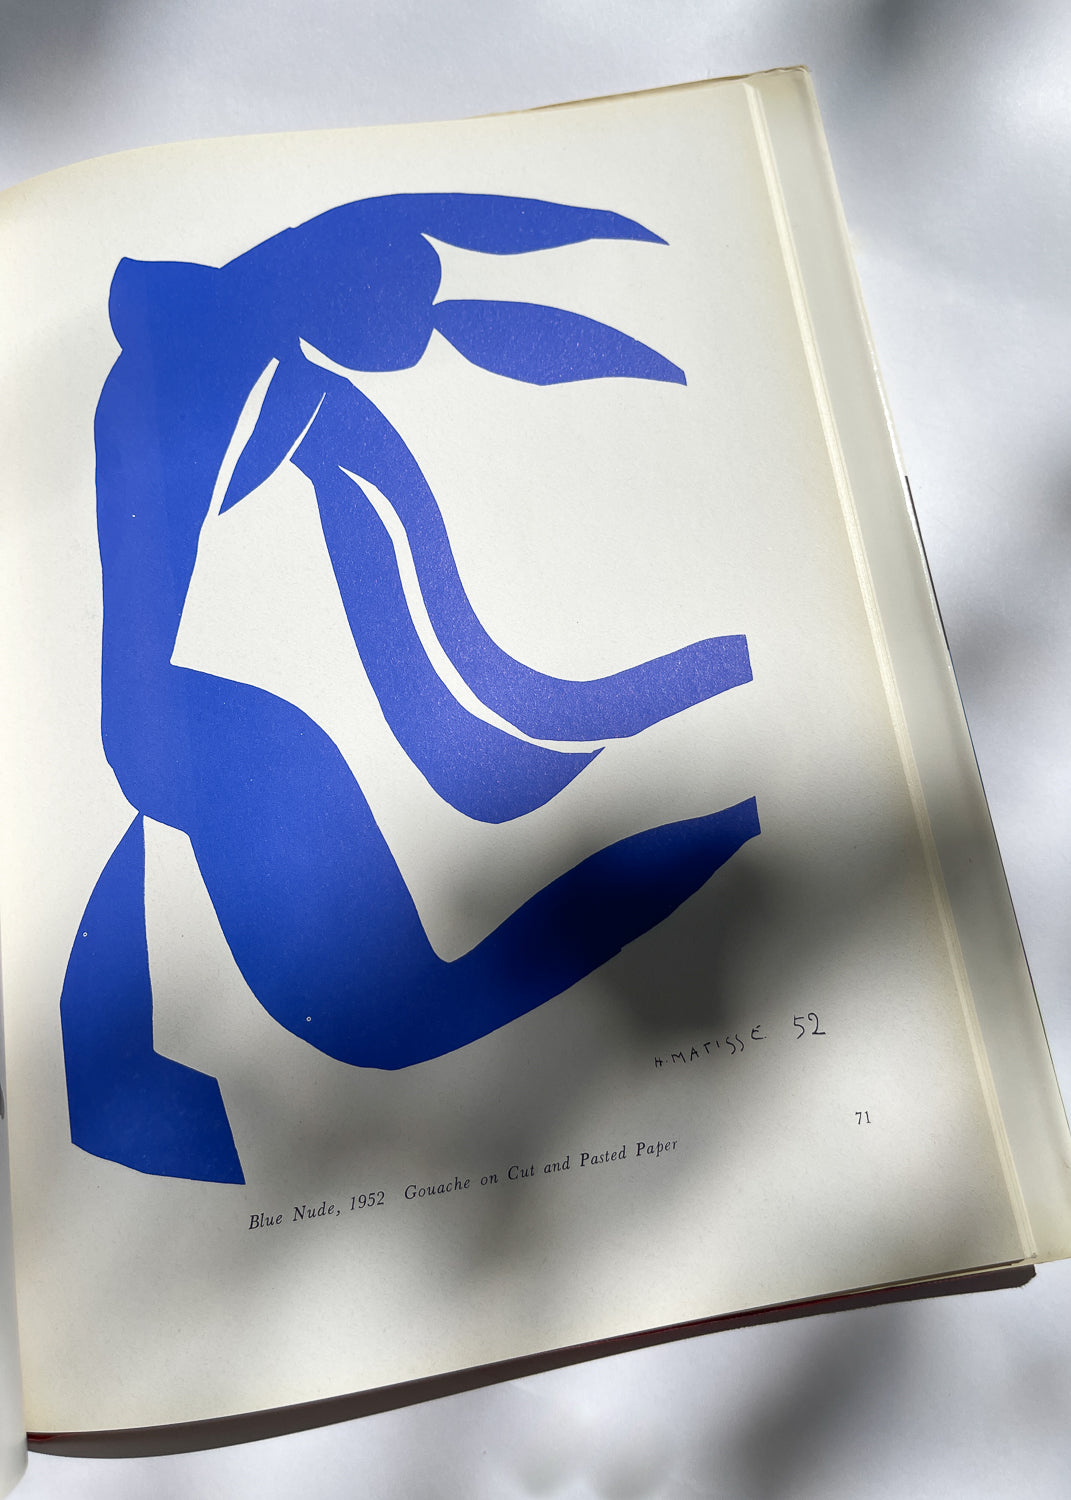 70's Matisse art book